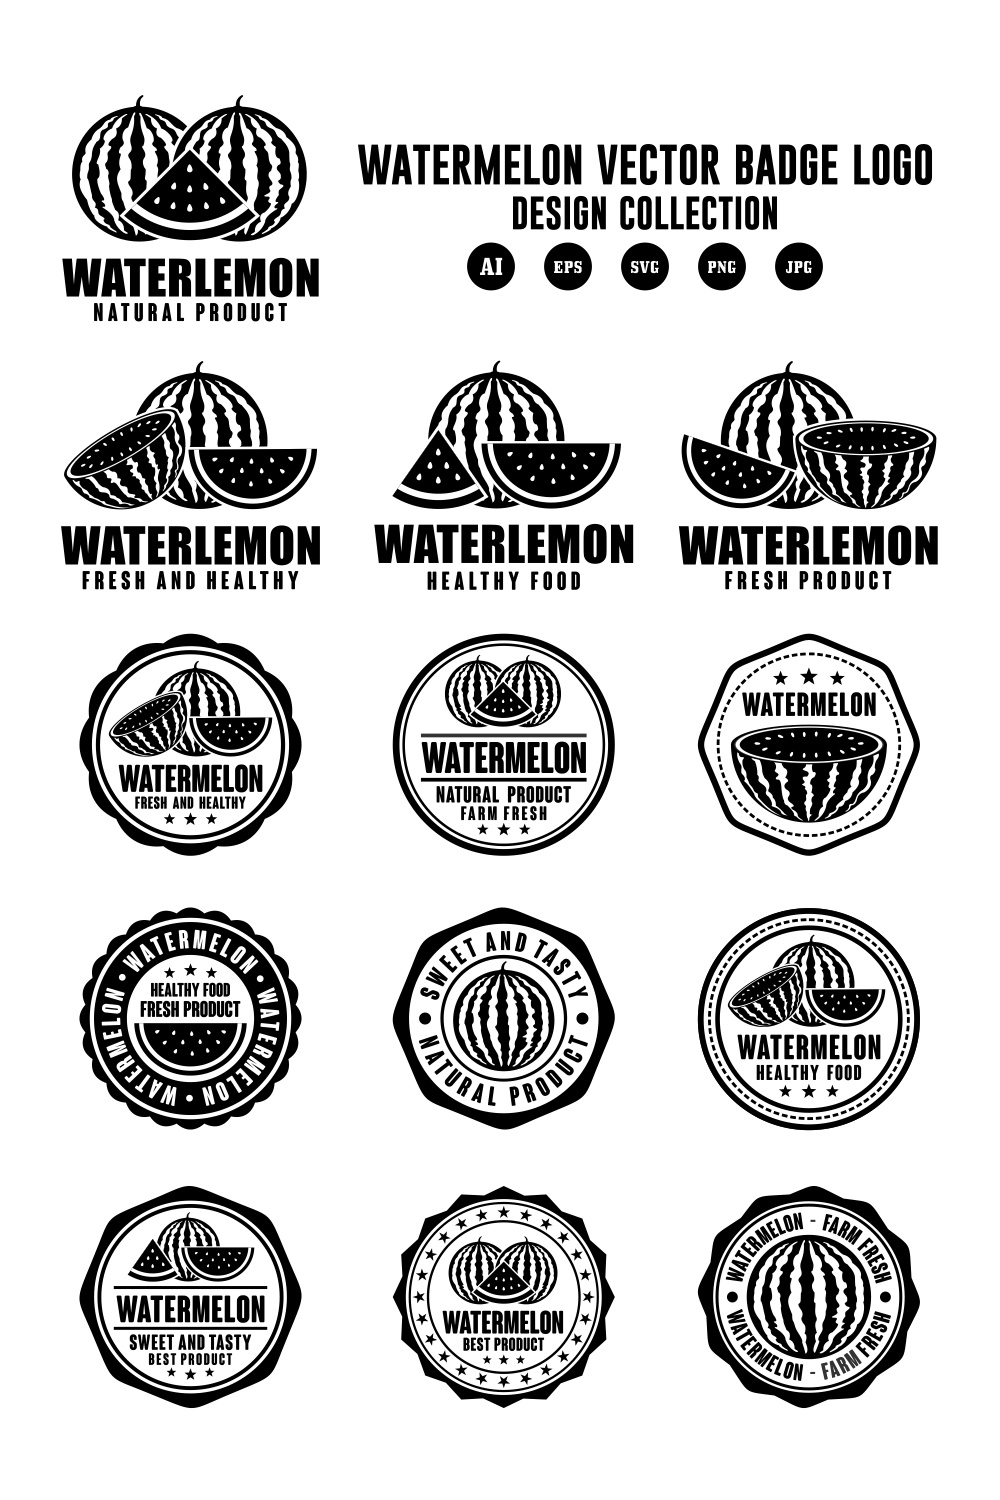 Set Watermelon vector logo design collection - $6 pinterest preview image.